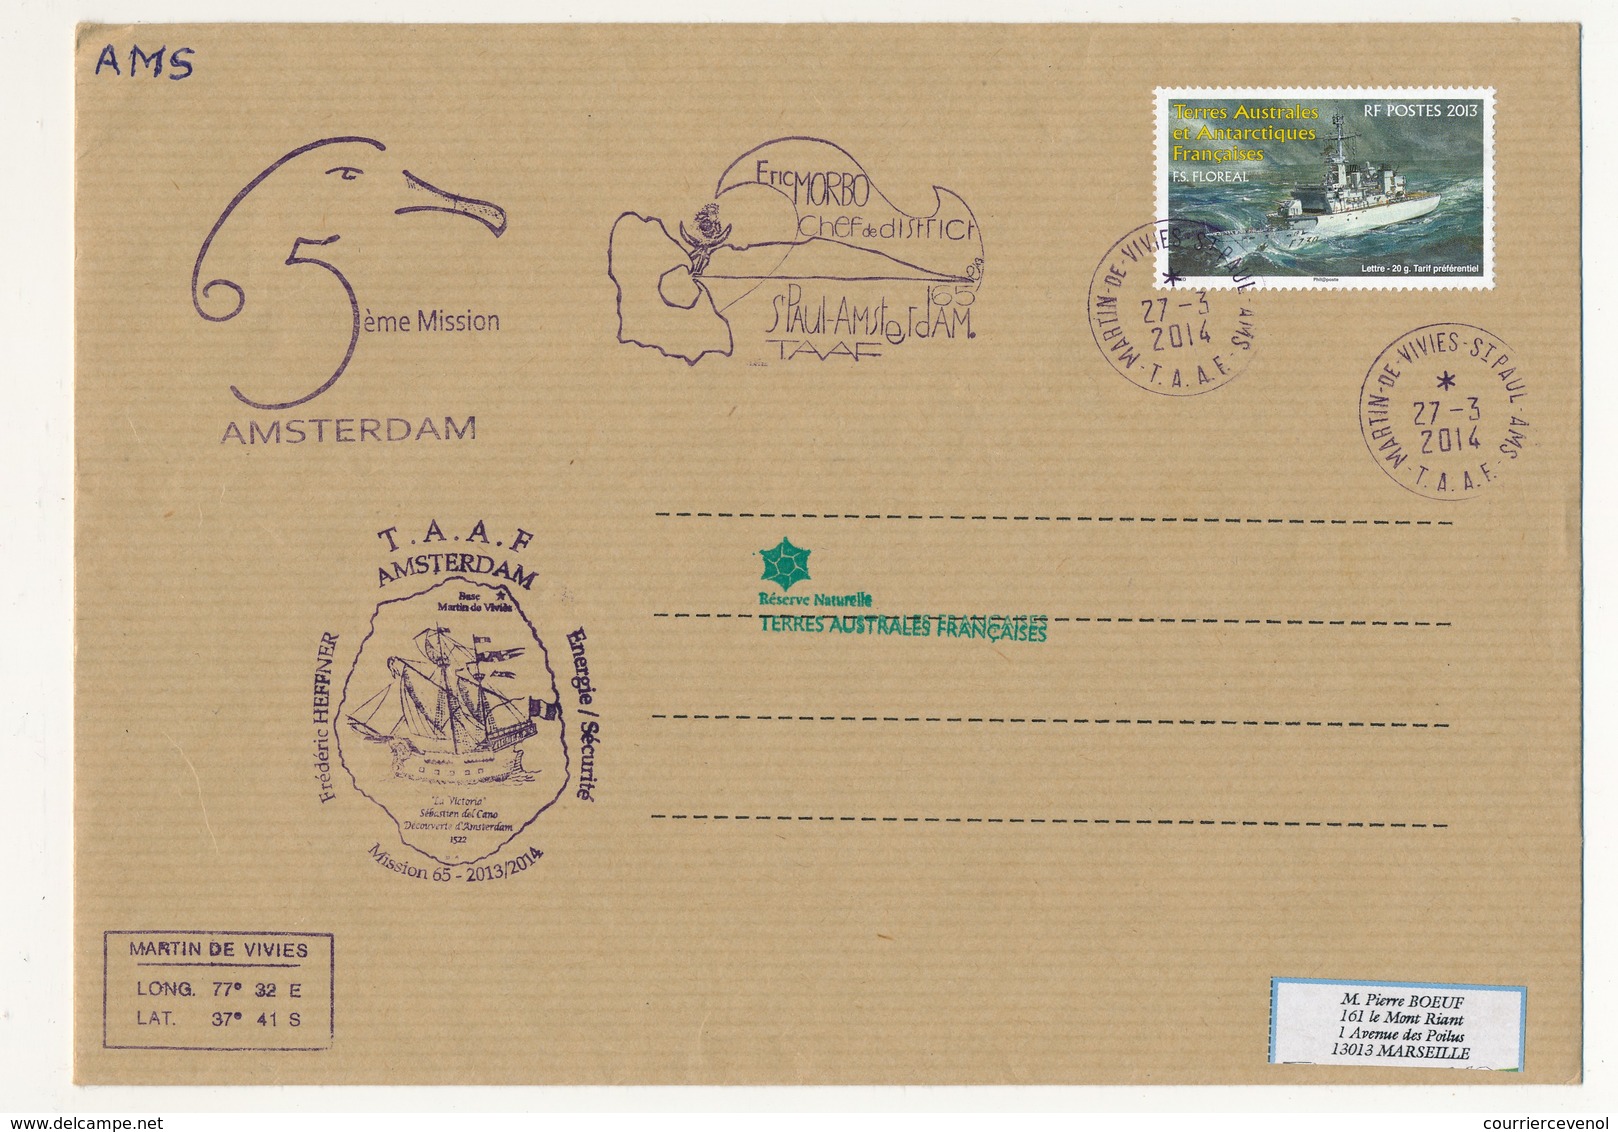 T.A.A.F - Enveloppe Martin De Vivies - St Paul Ams - 27/3/2014 - FS Floreal / 5eme Mission Amsterdam - Cartas & Documentos